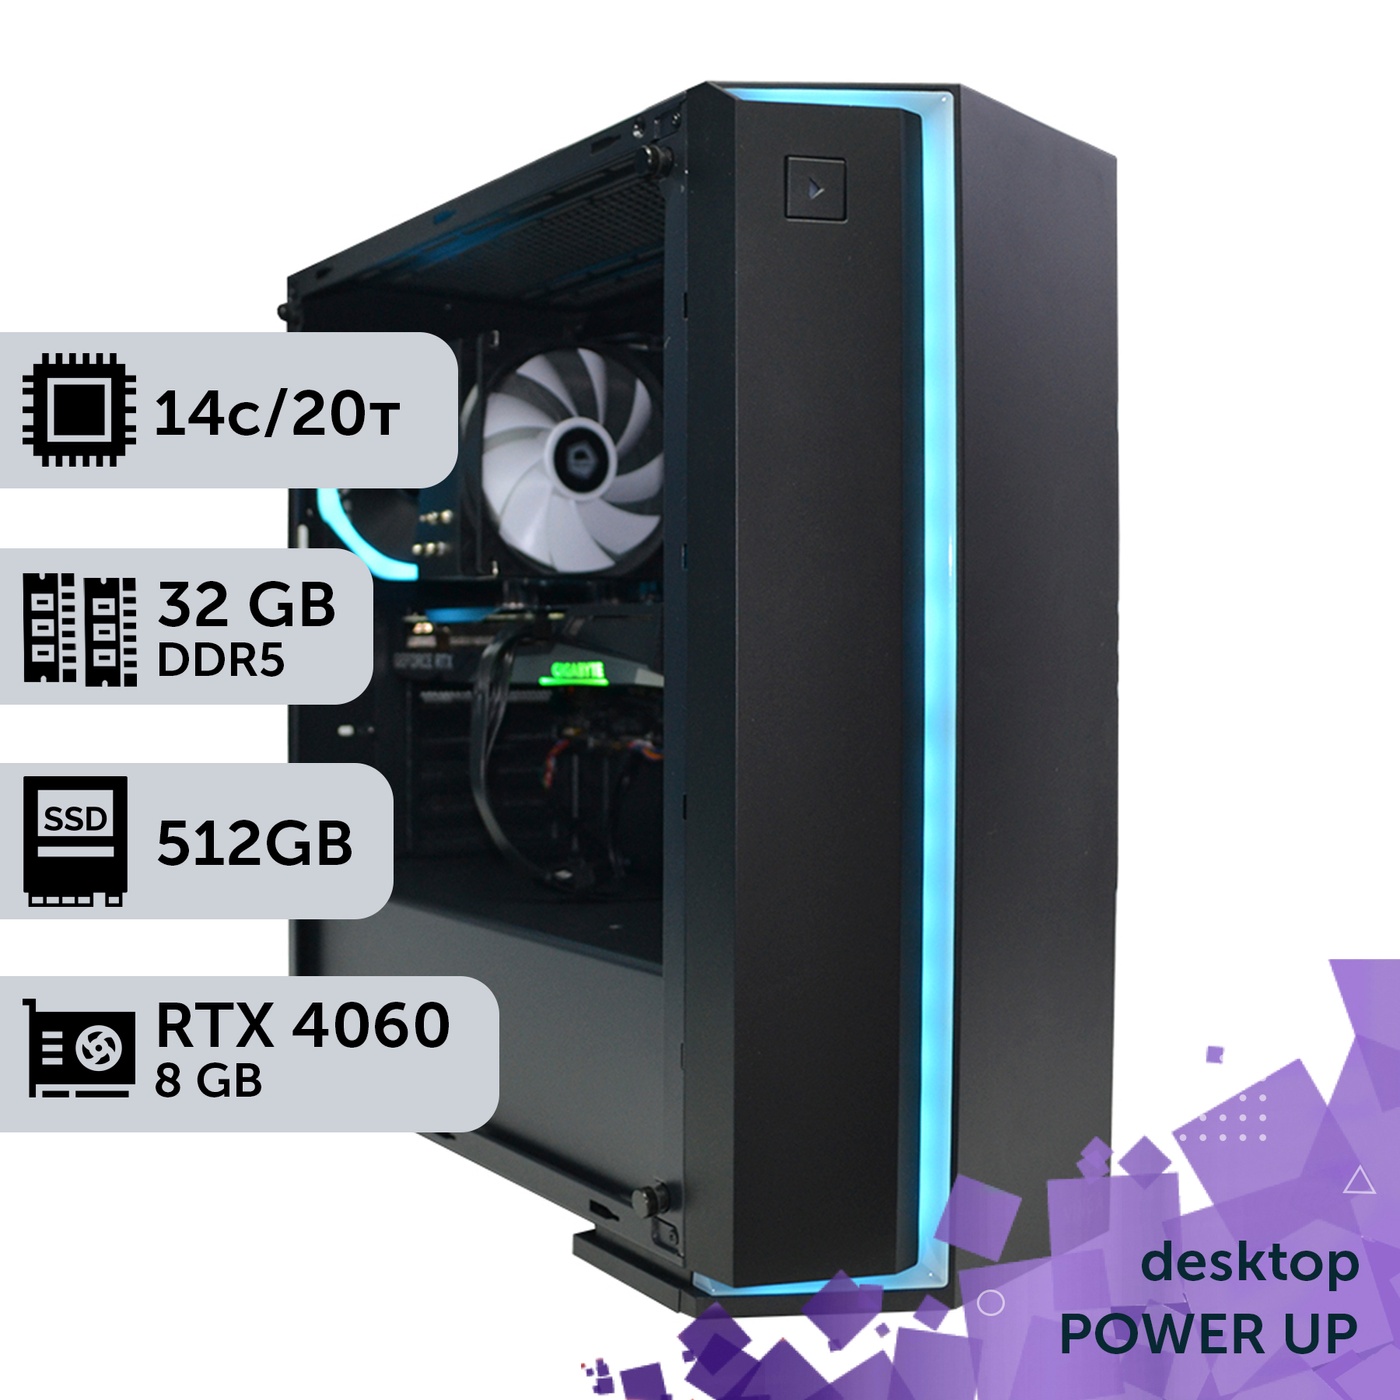 Рабочая станция PowerUp Desktop #330 Core i5 14600K/32 GB/SSD 512GB/GeForce RTX 4060 8GB